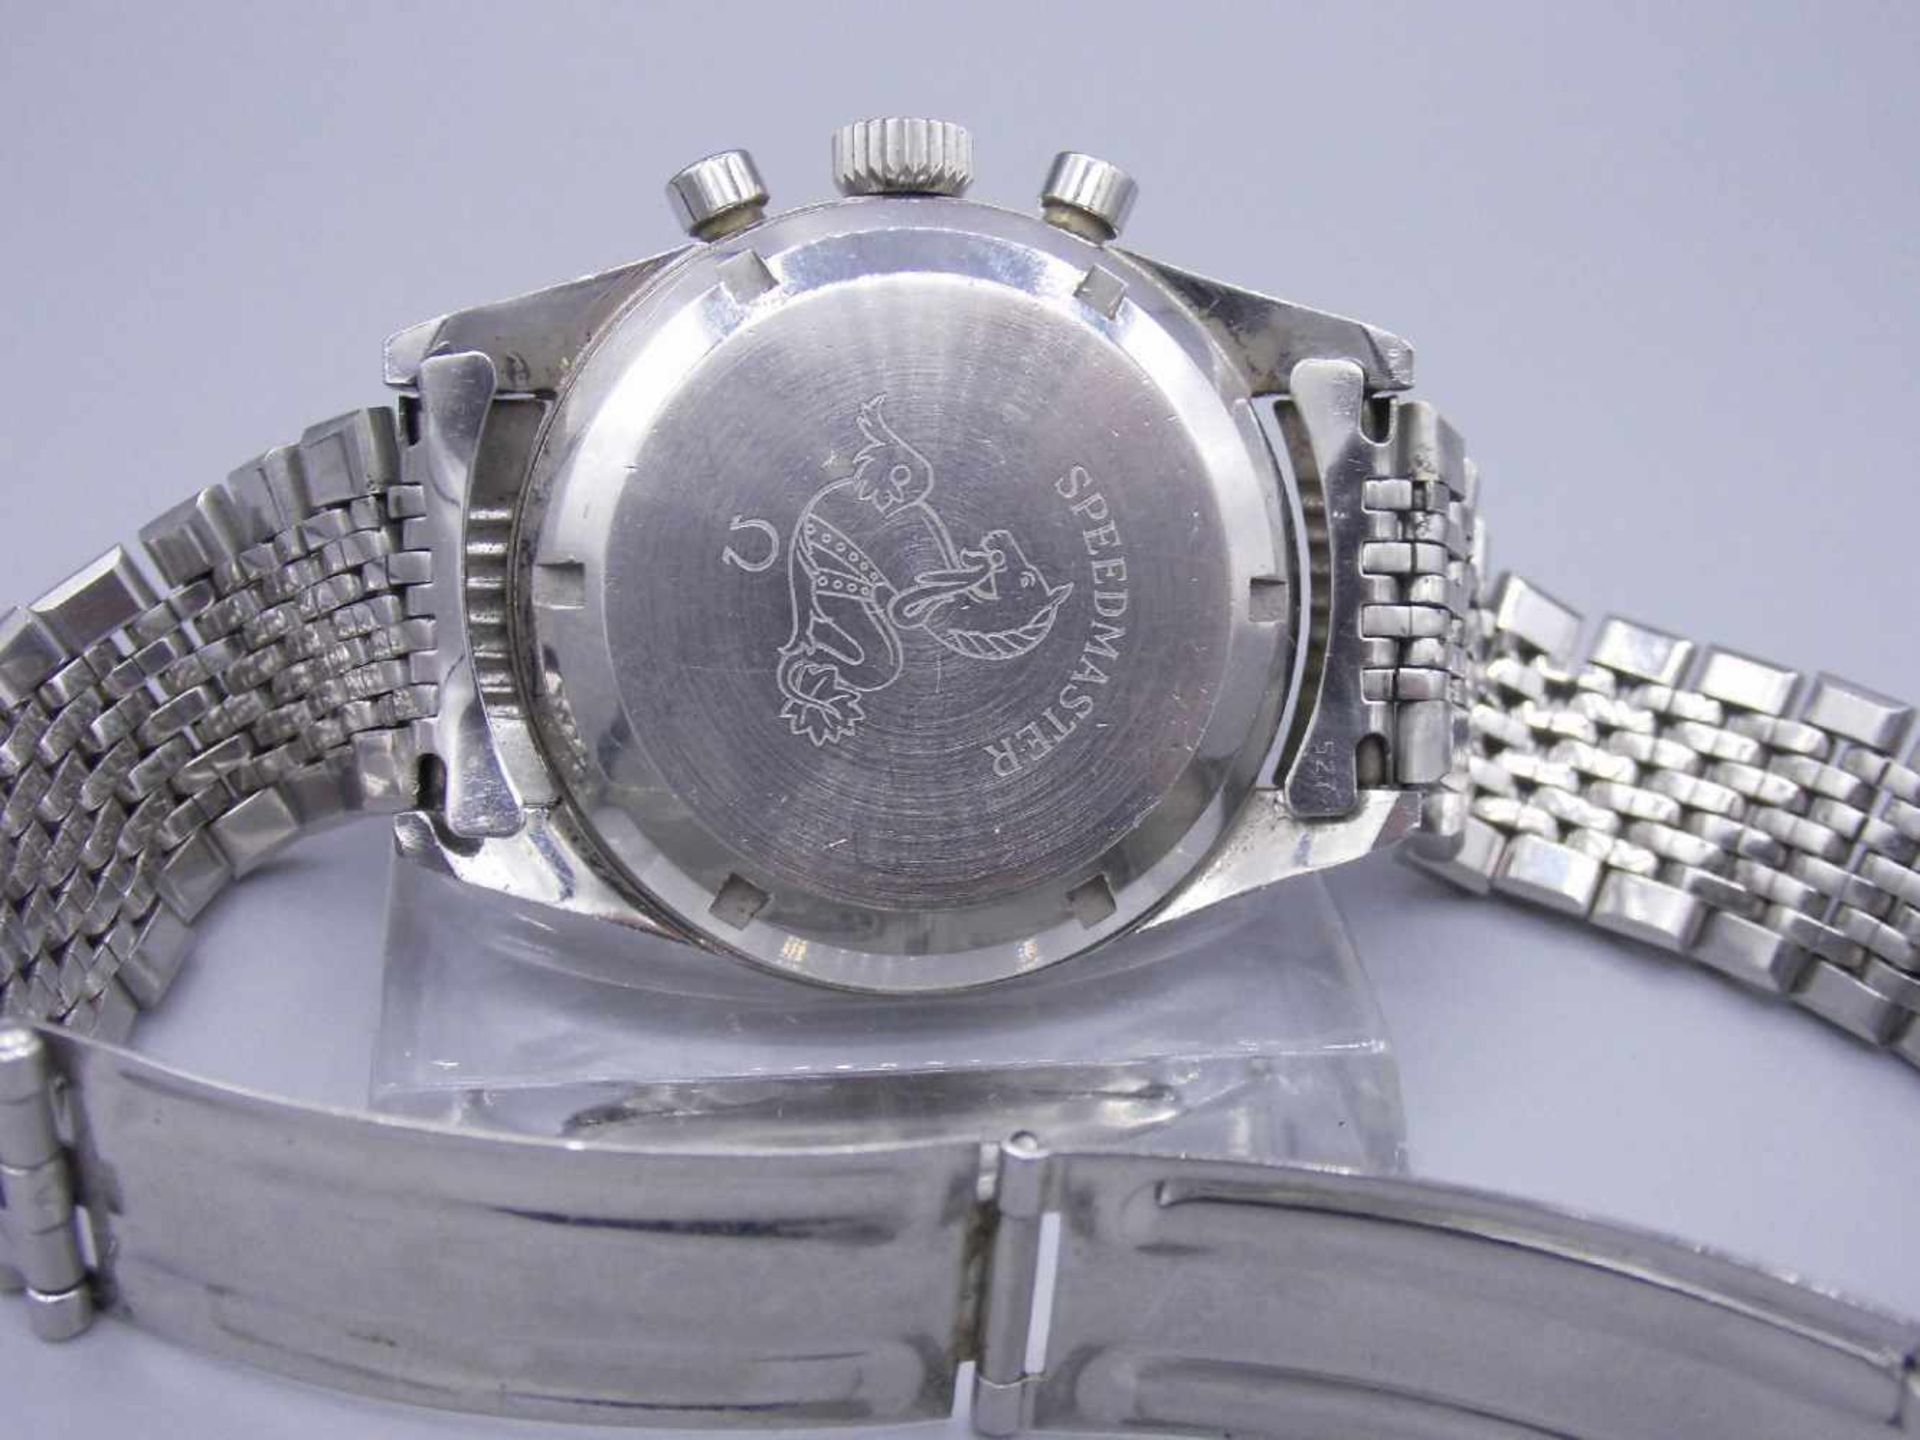 VINTAGE ARMBANDUHR / CHRONOGRAPH - Omega Speedmaster / wristwatch, Handaufzug, 1960er Jahre ( - Image 12 of 13